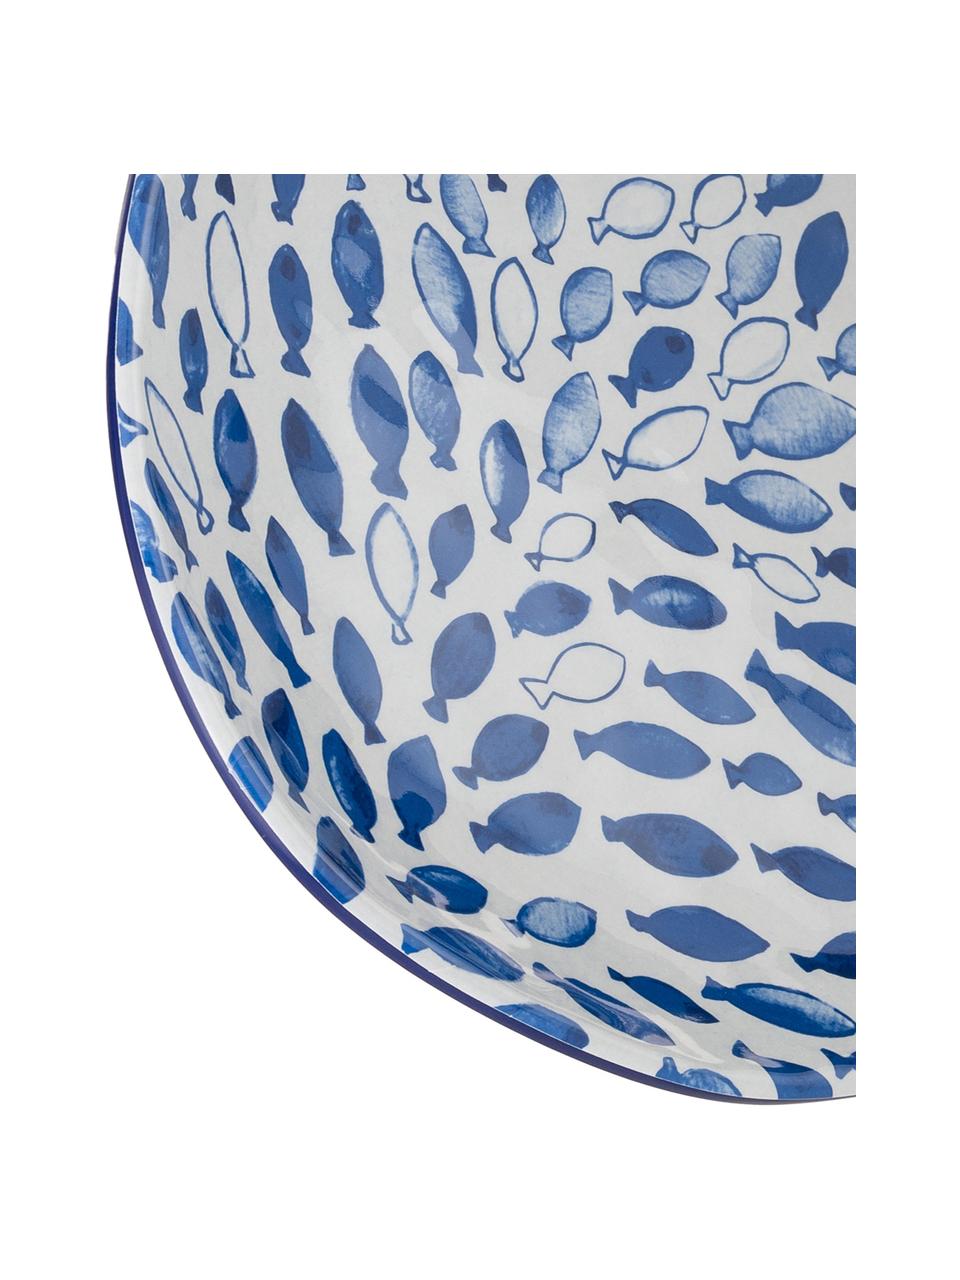 Fuente de melamina Vassoio, Melamina, Azul, blanco, L 52 x An 30 cm